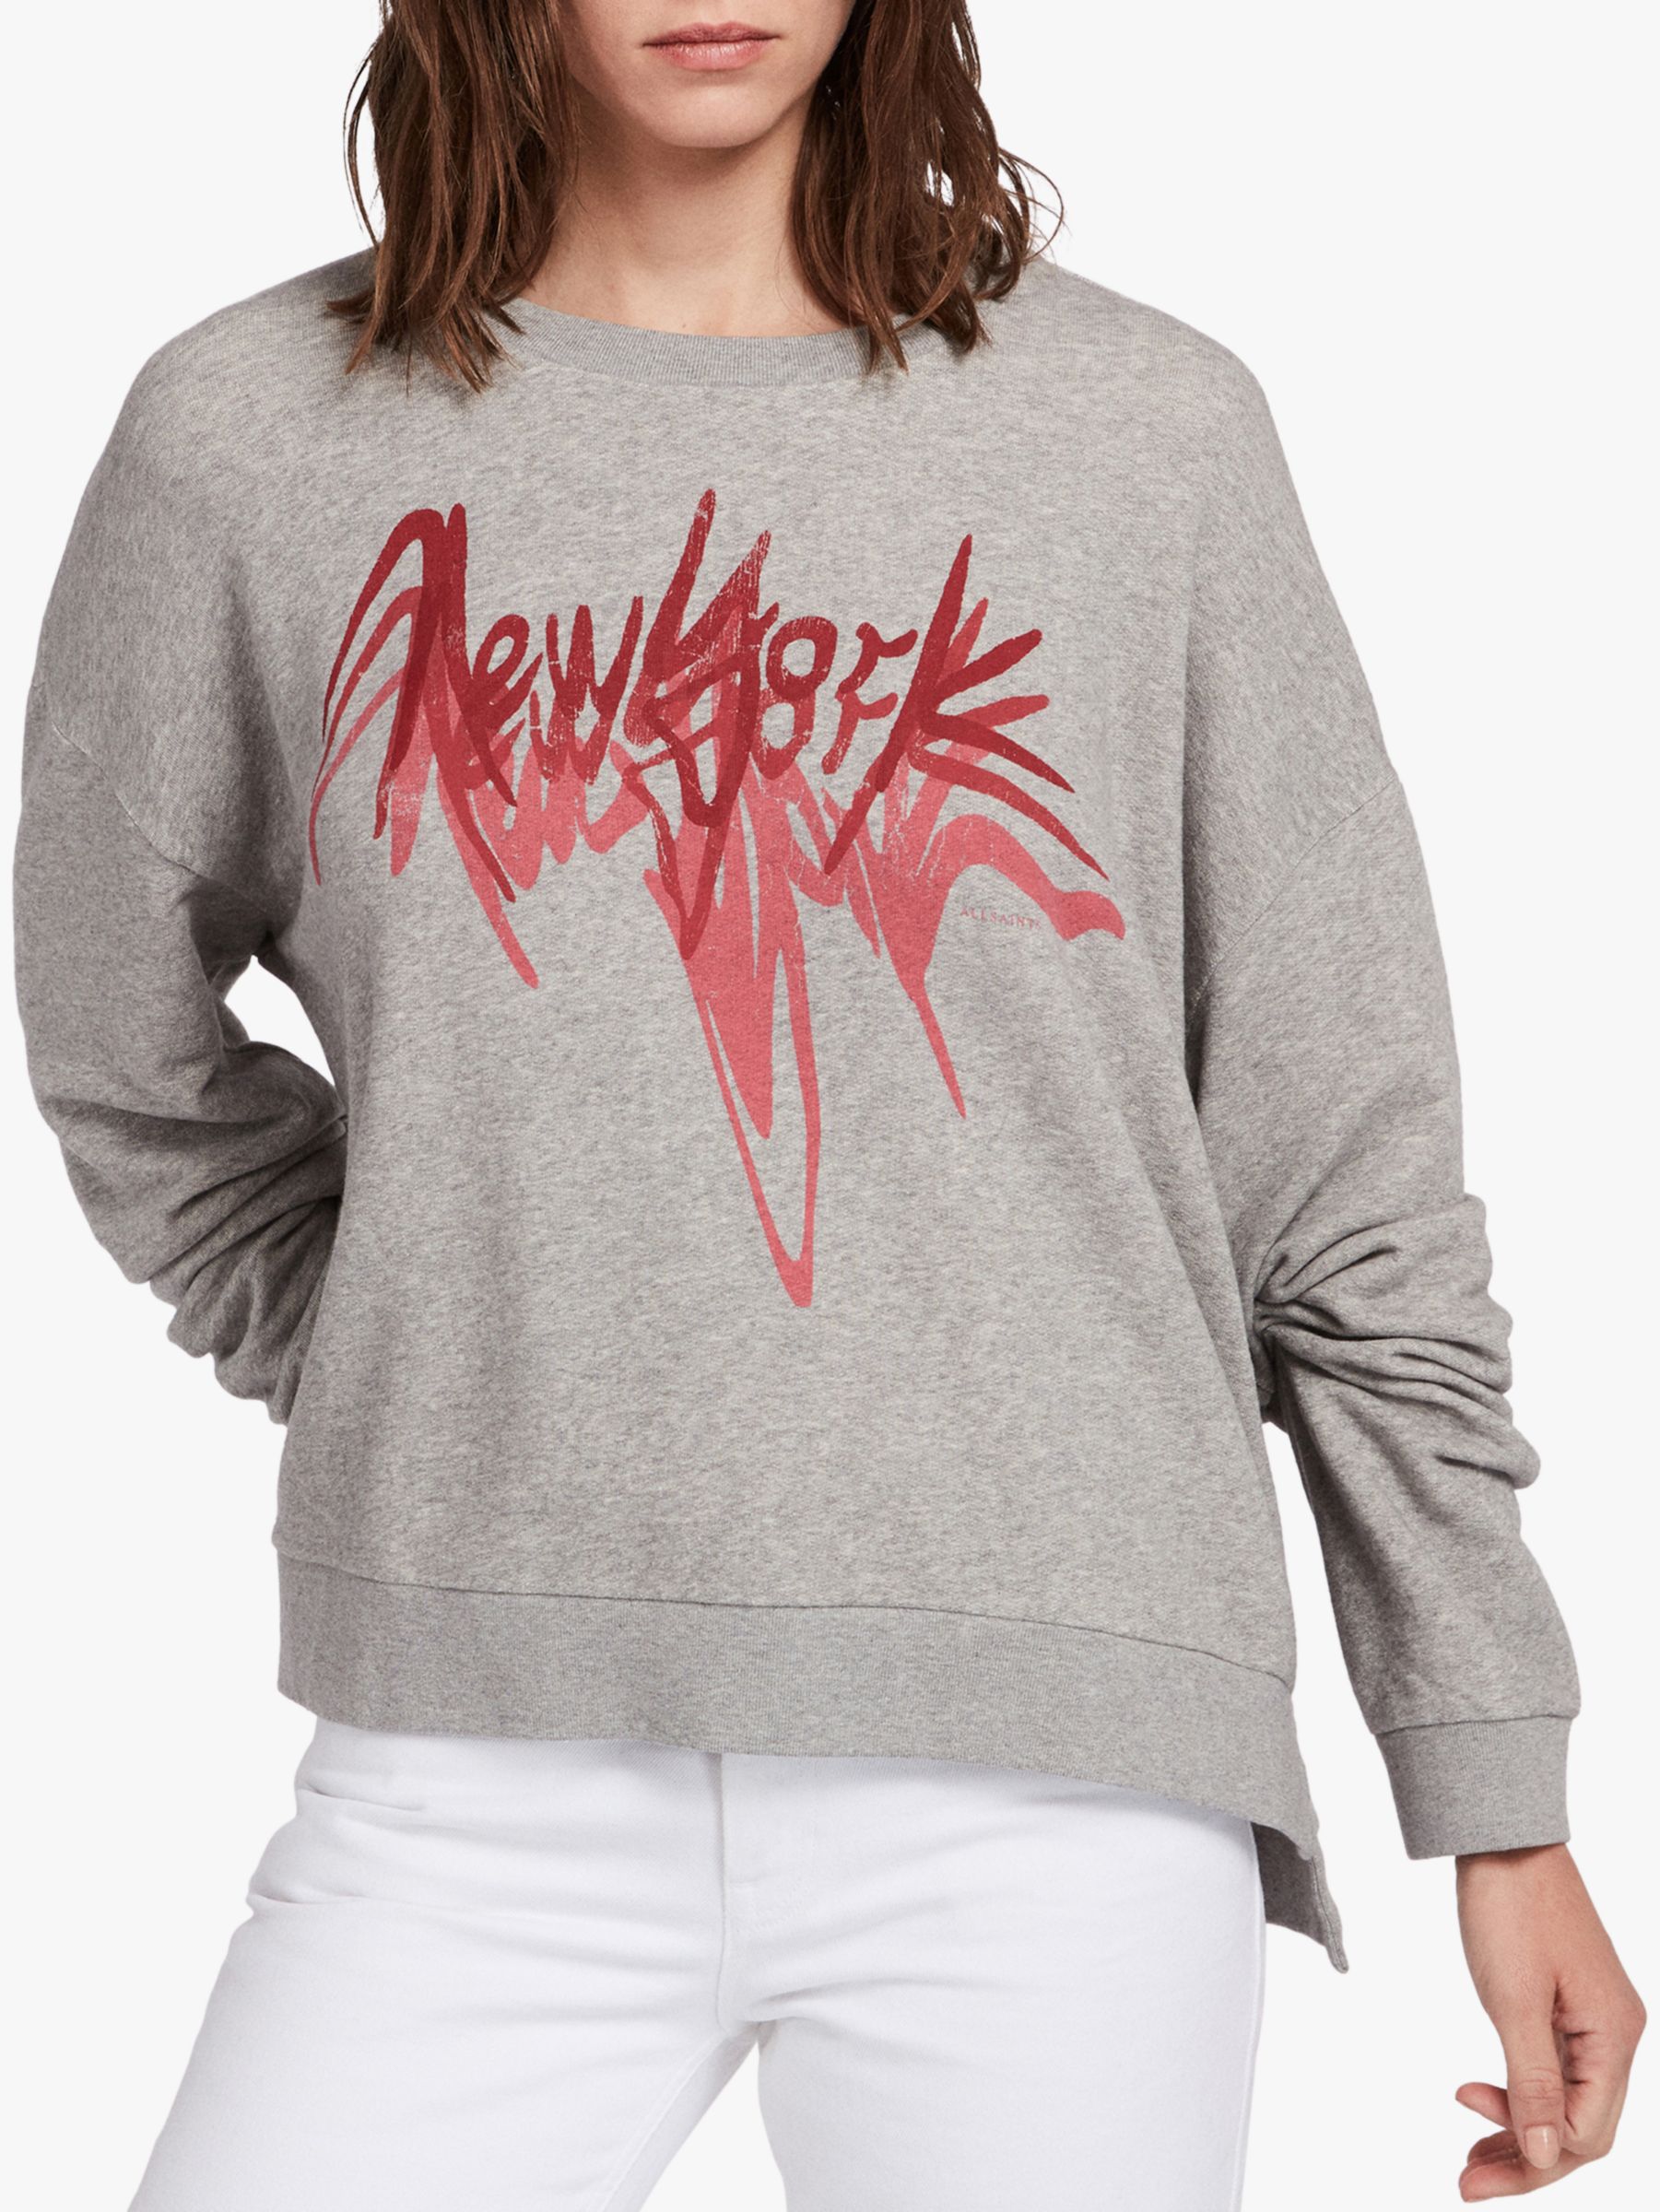 AllSaints New York City Sweatshirt, Grey Marl